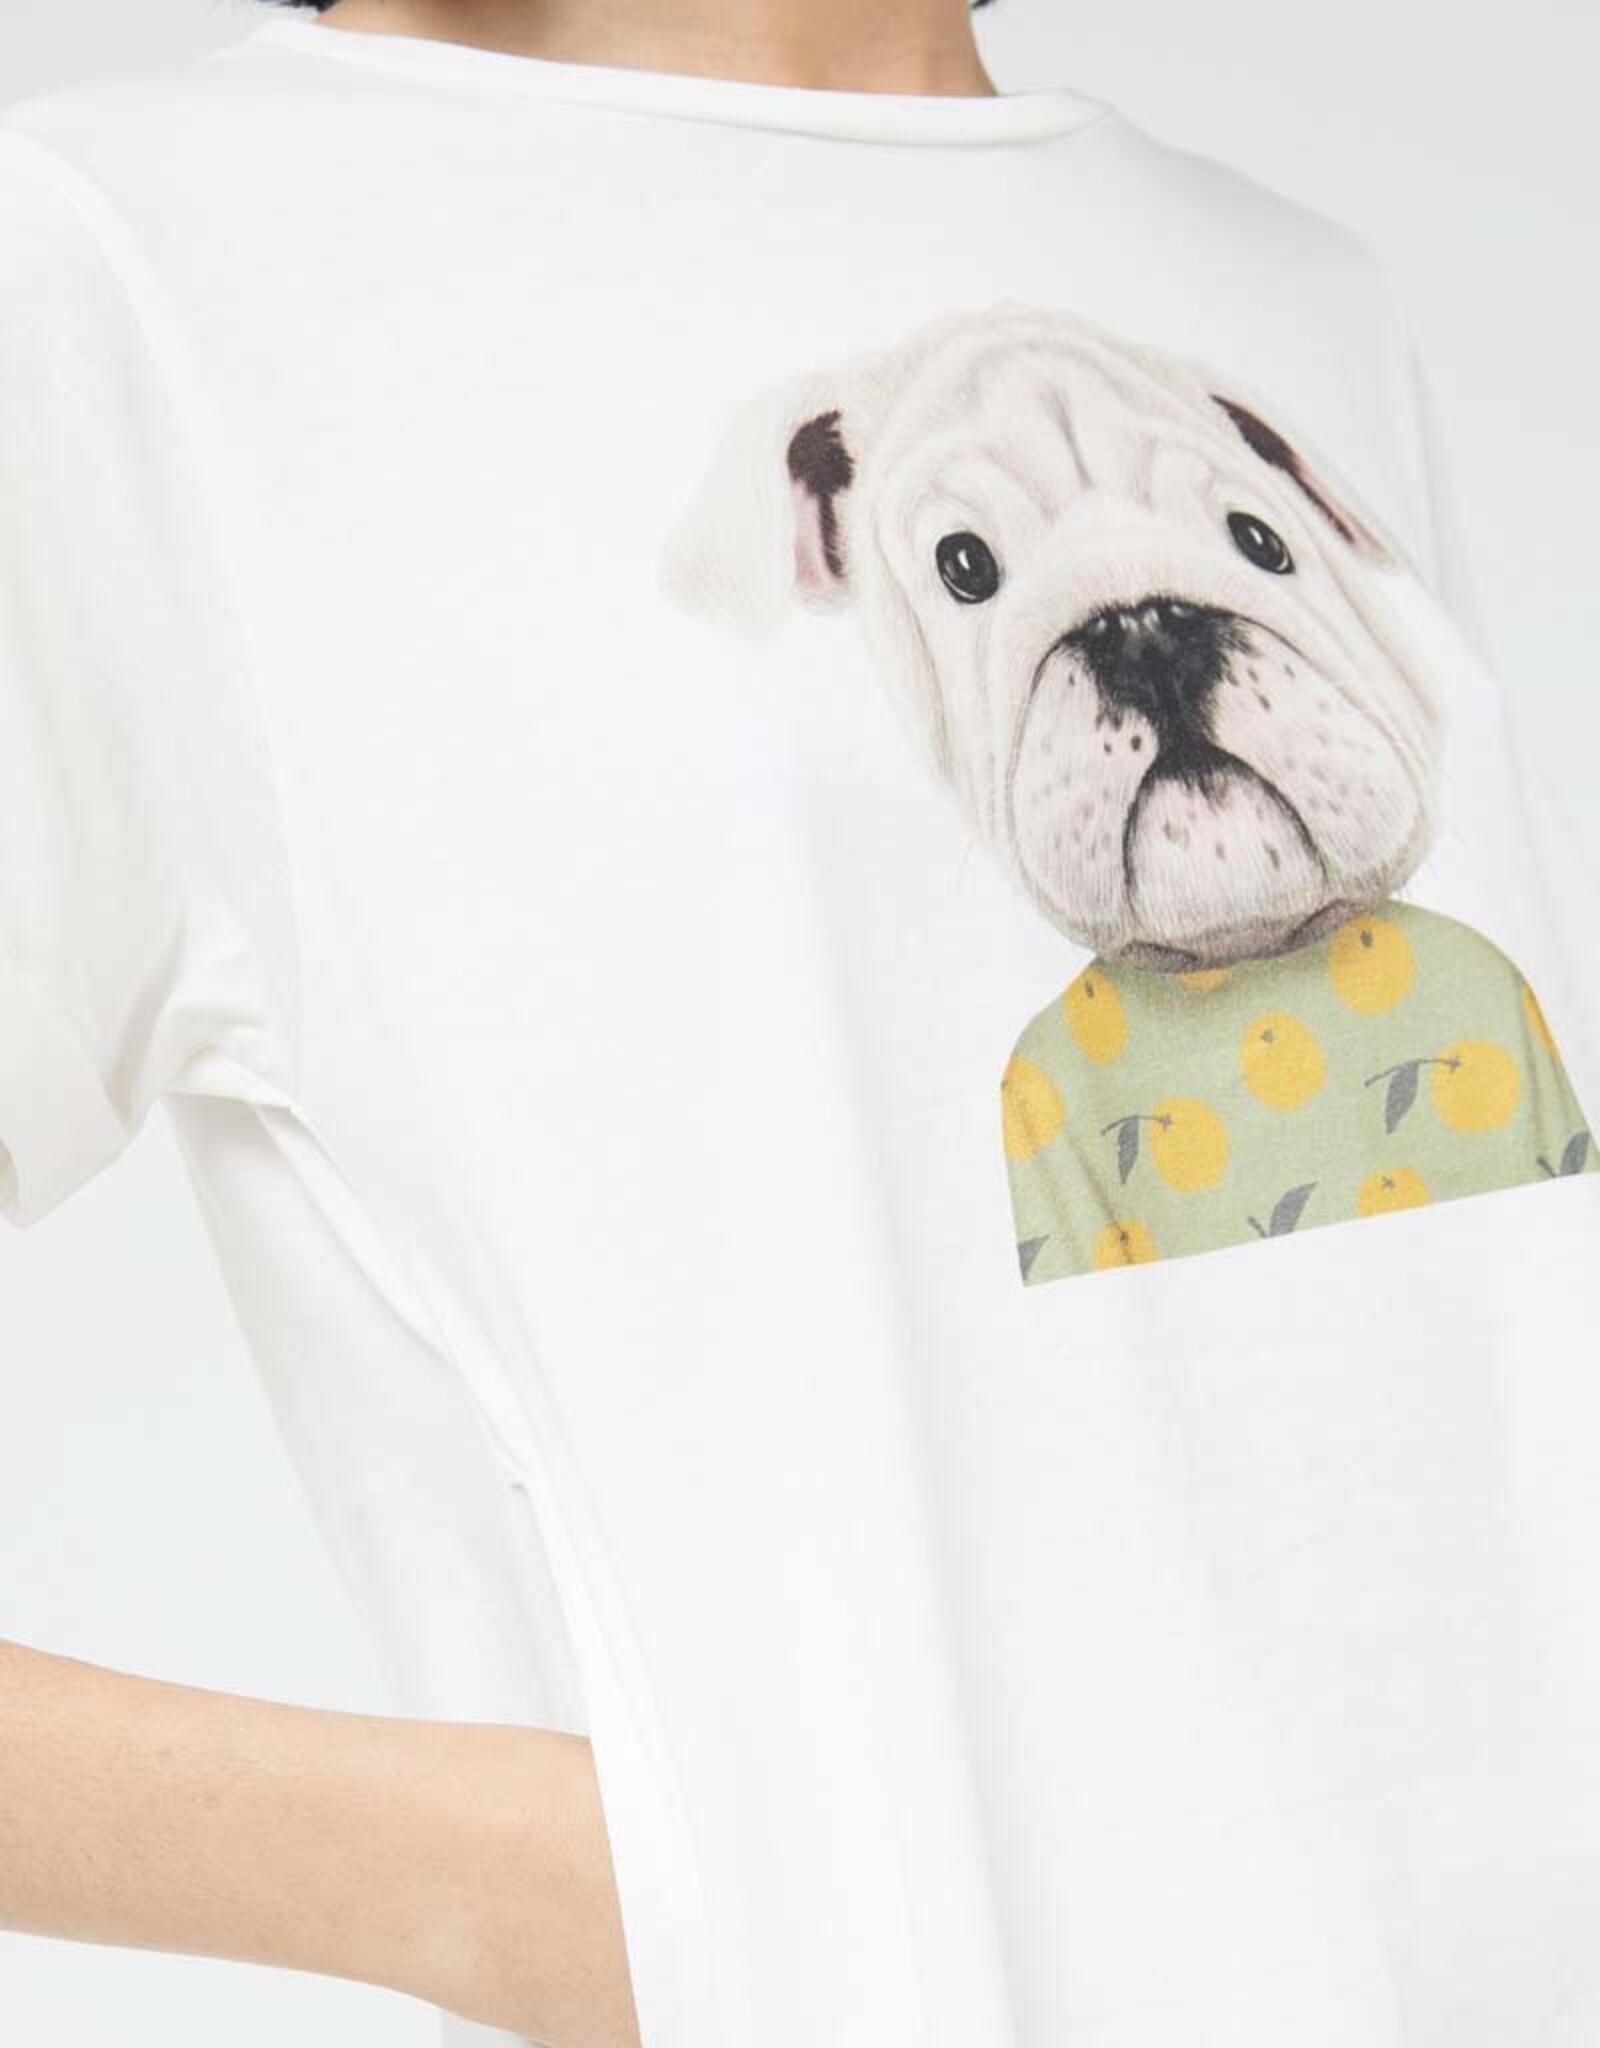 Compania Fantastica Dog Face T-Shirt